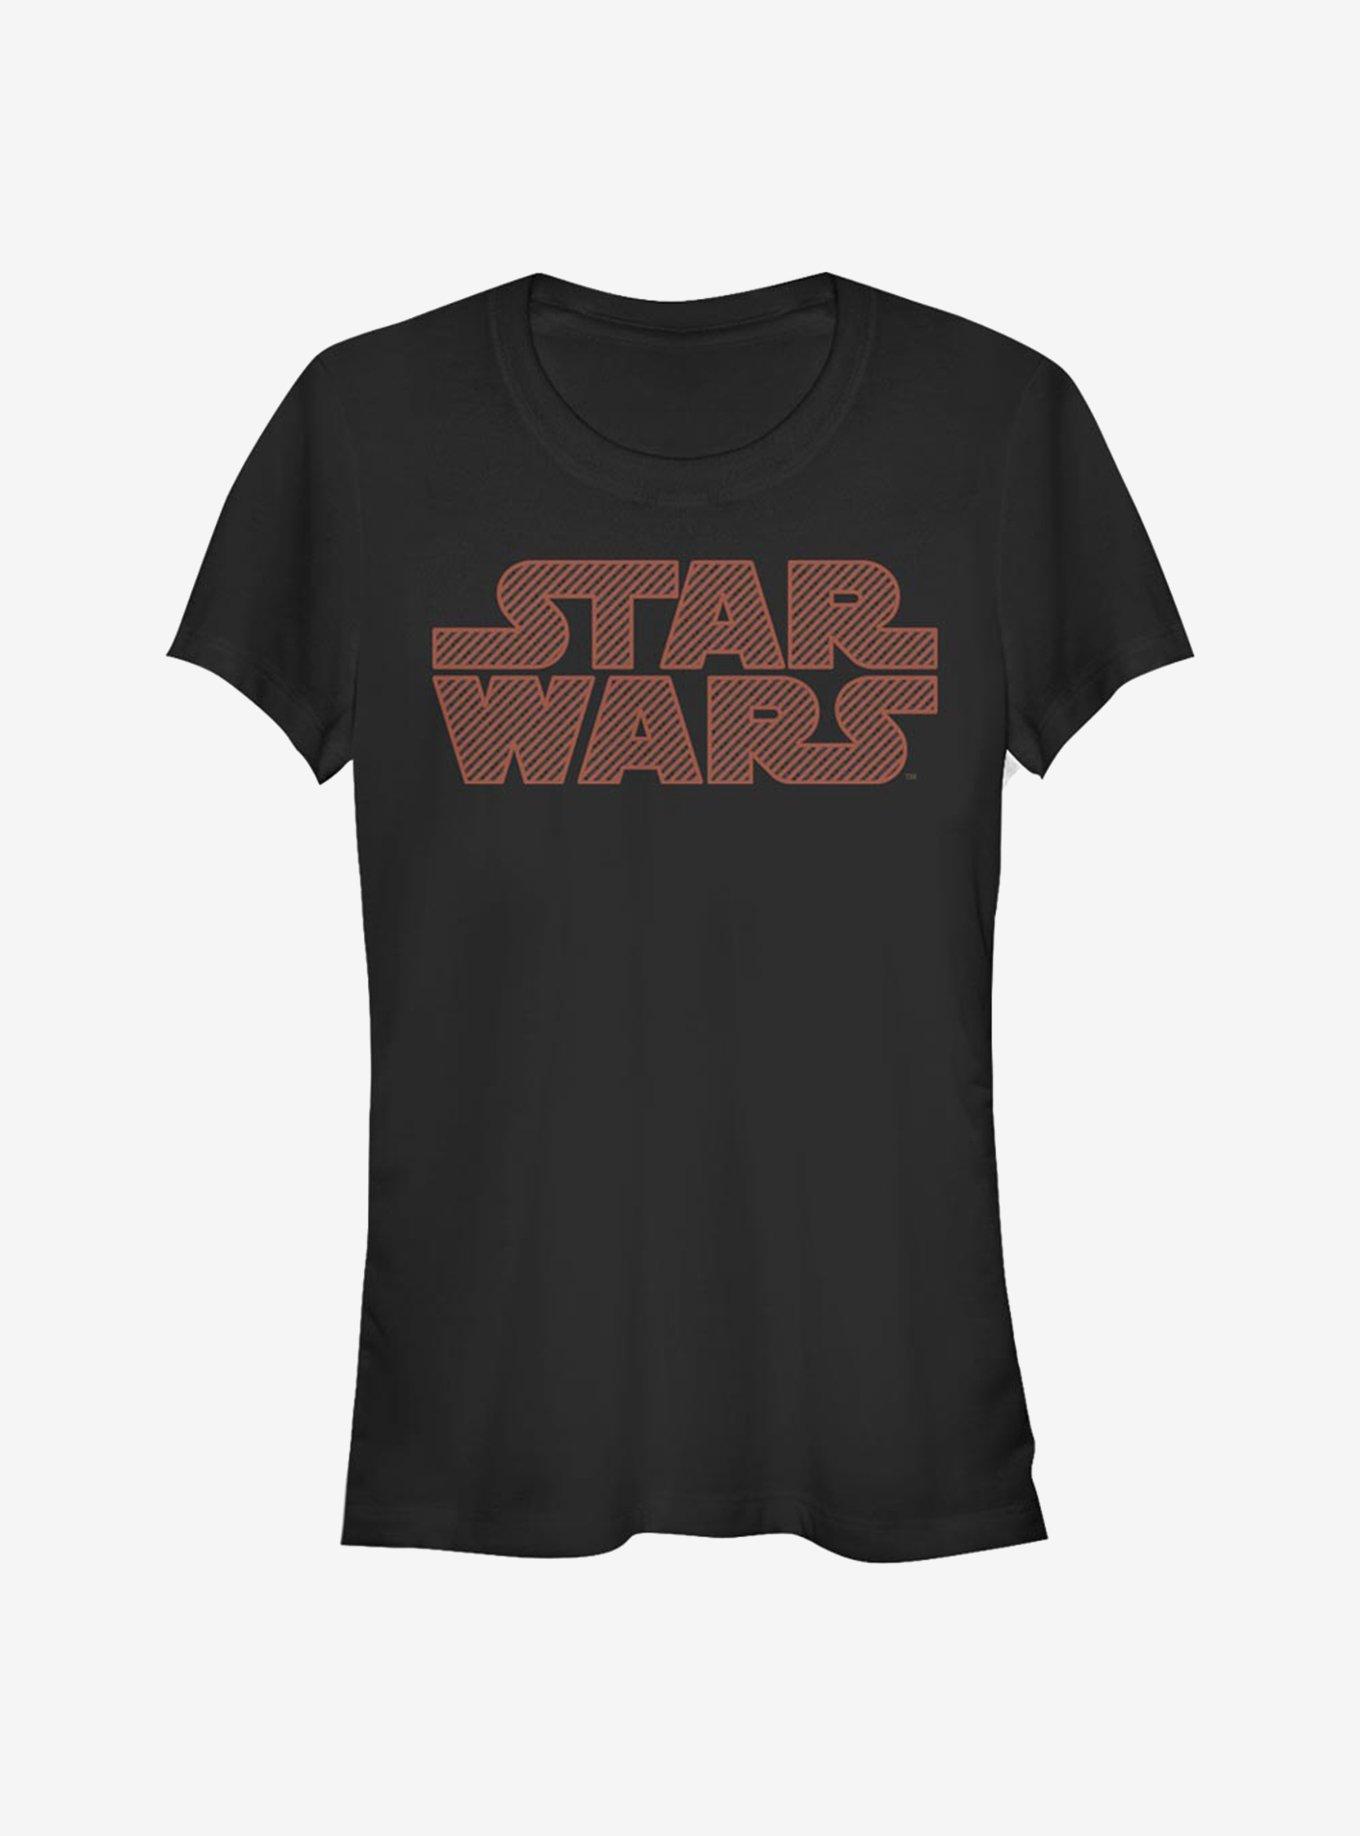 Star Wars Classic Striped Logo Girls T-Shirt